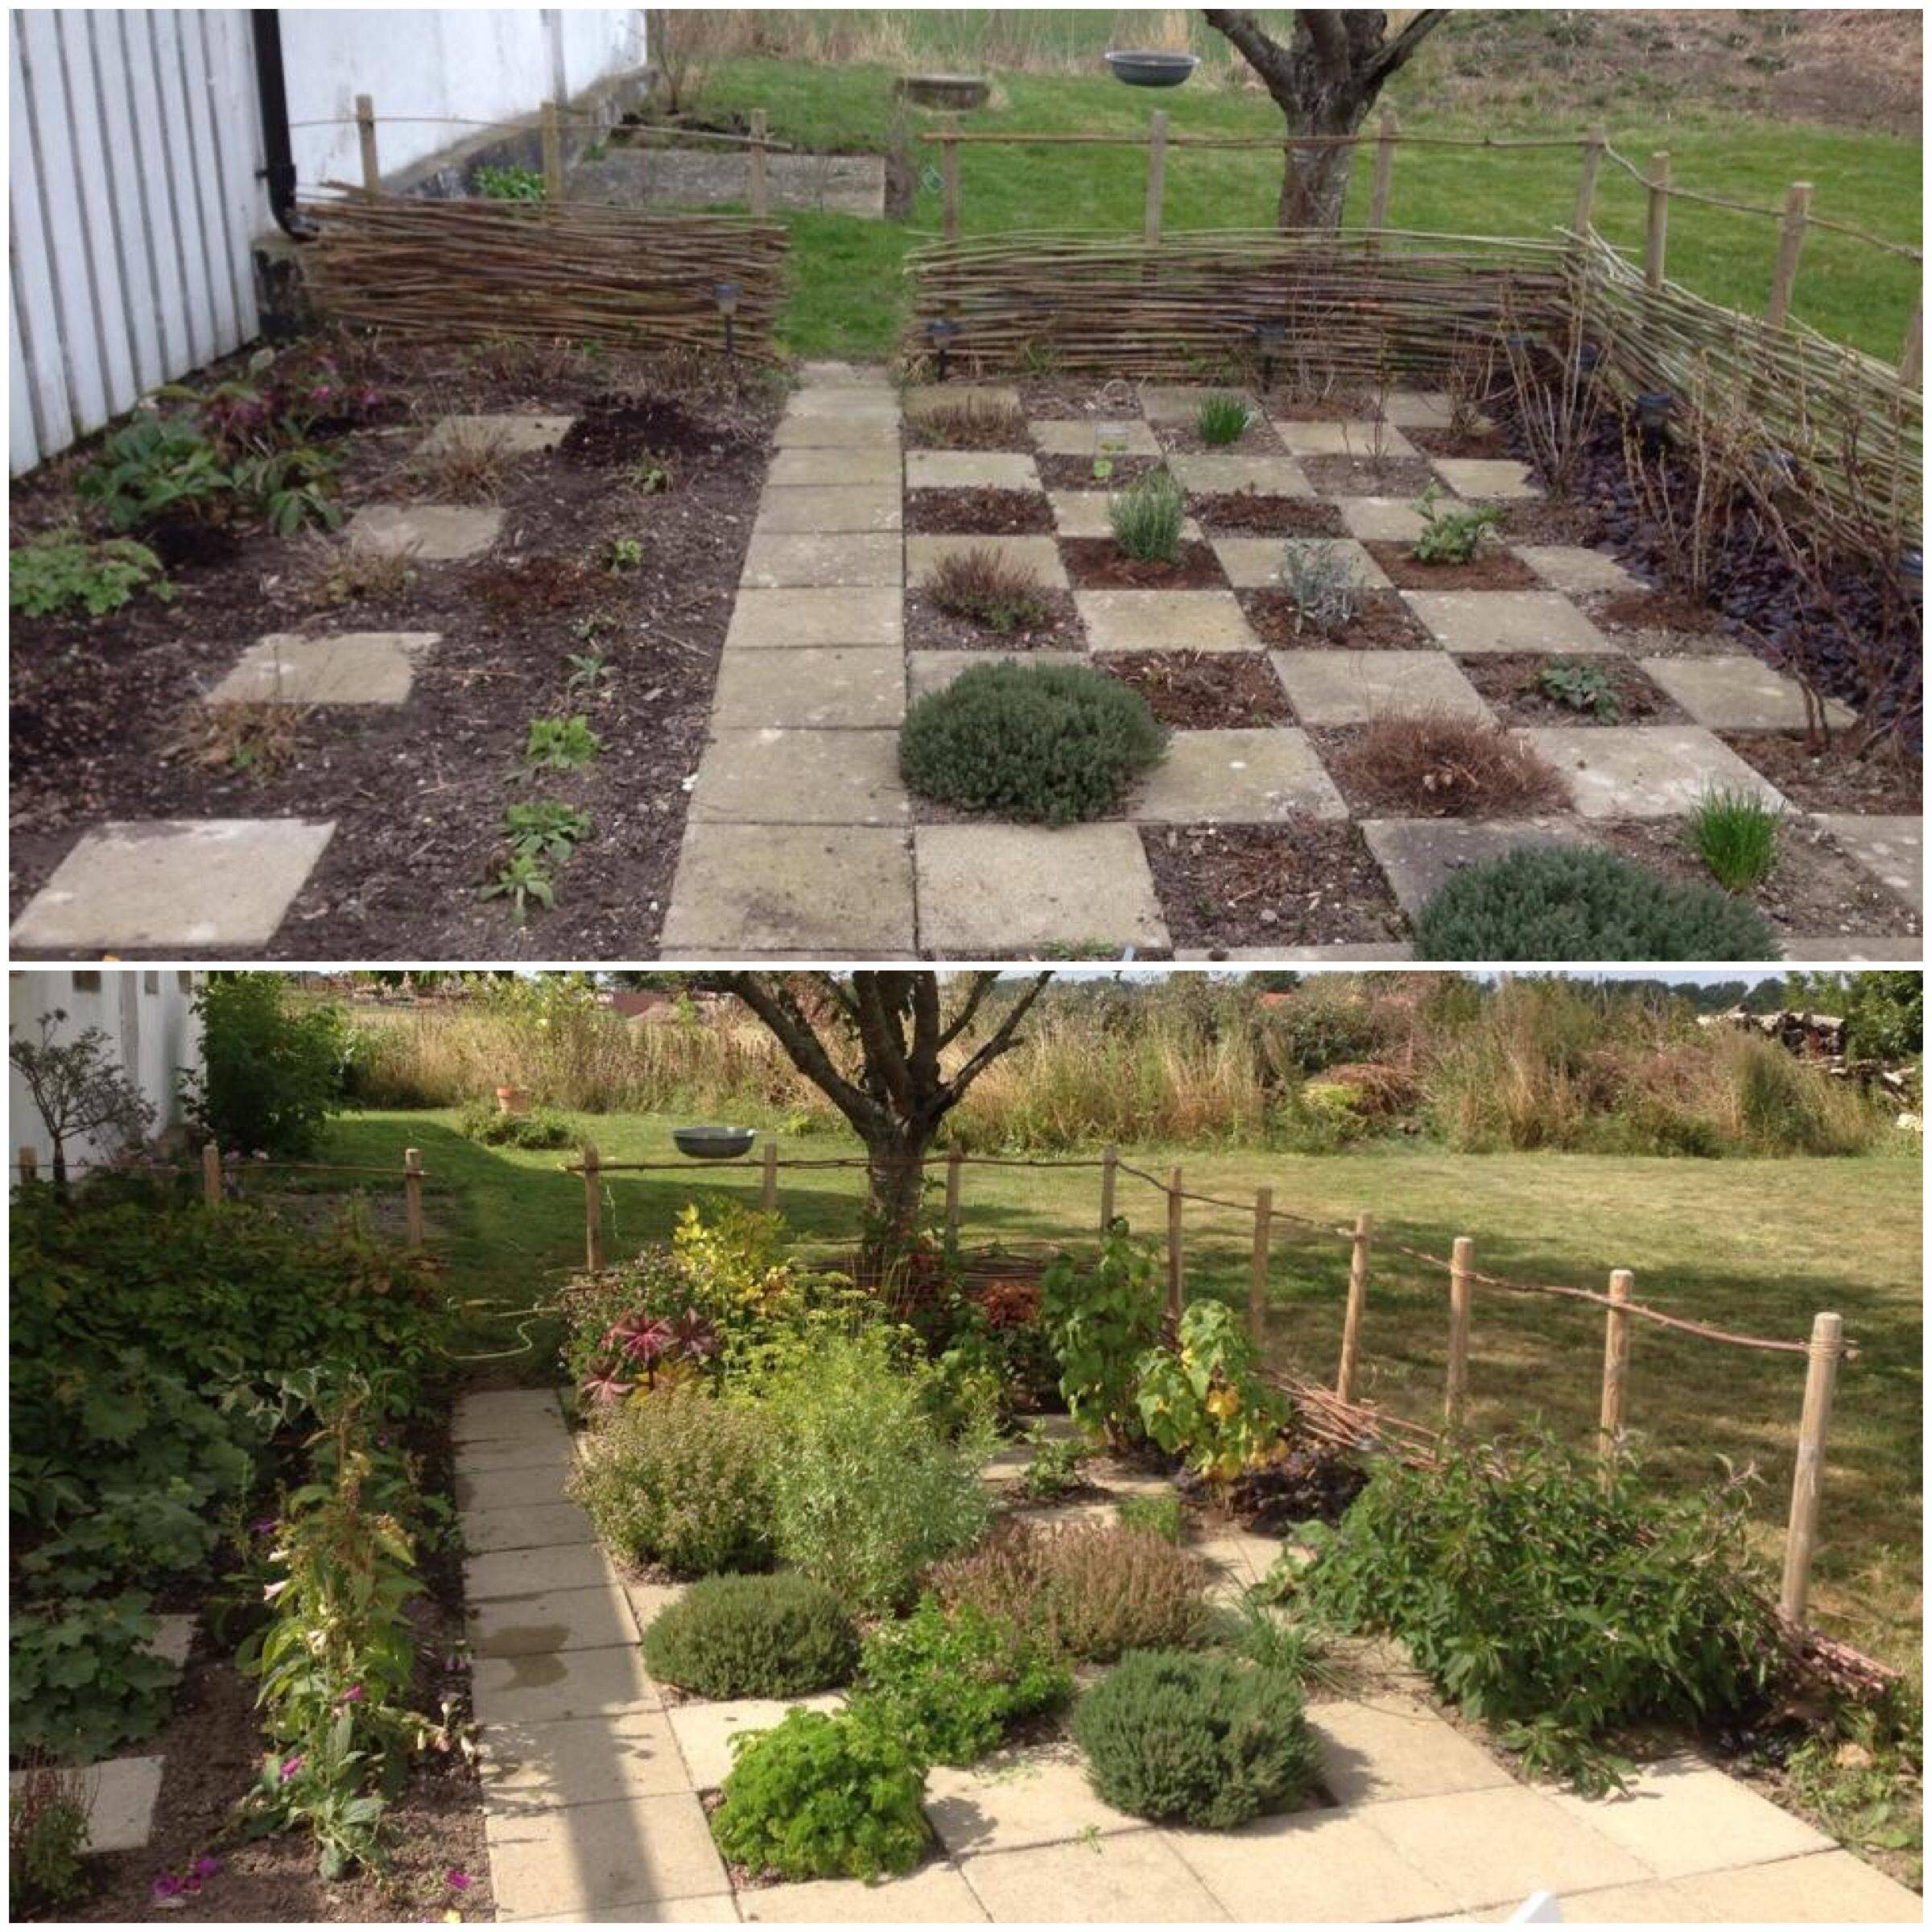 Best Herb Garden Ideas Small Space